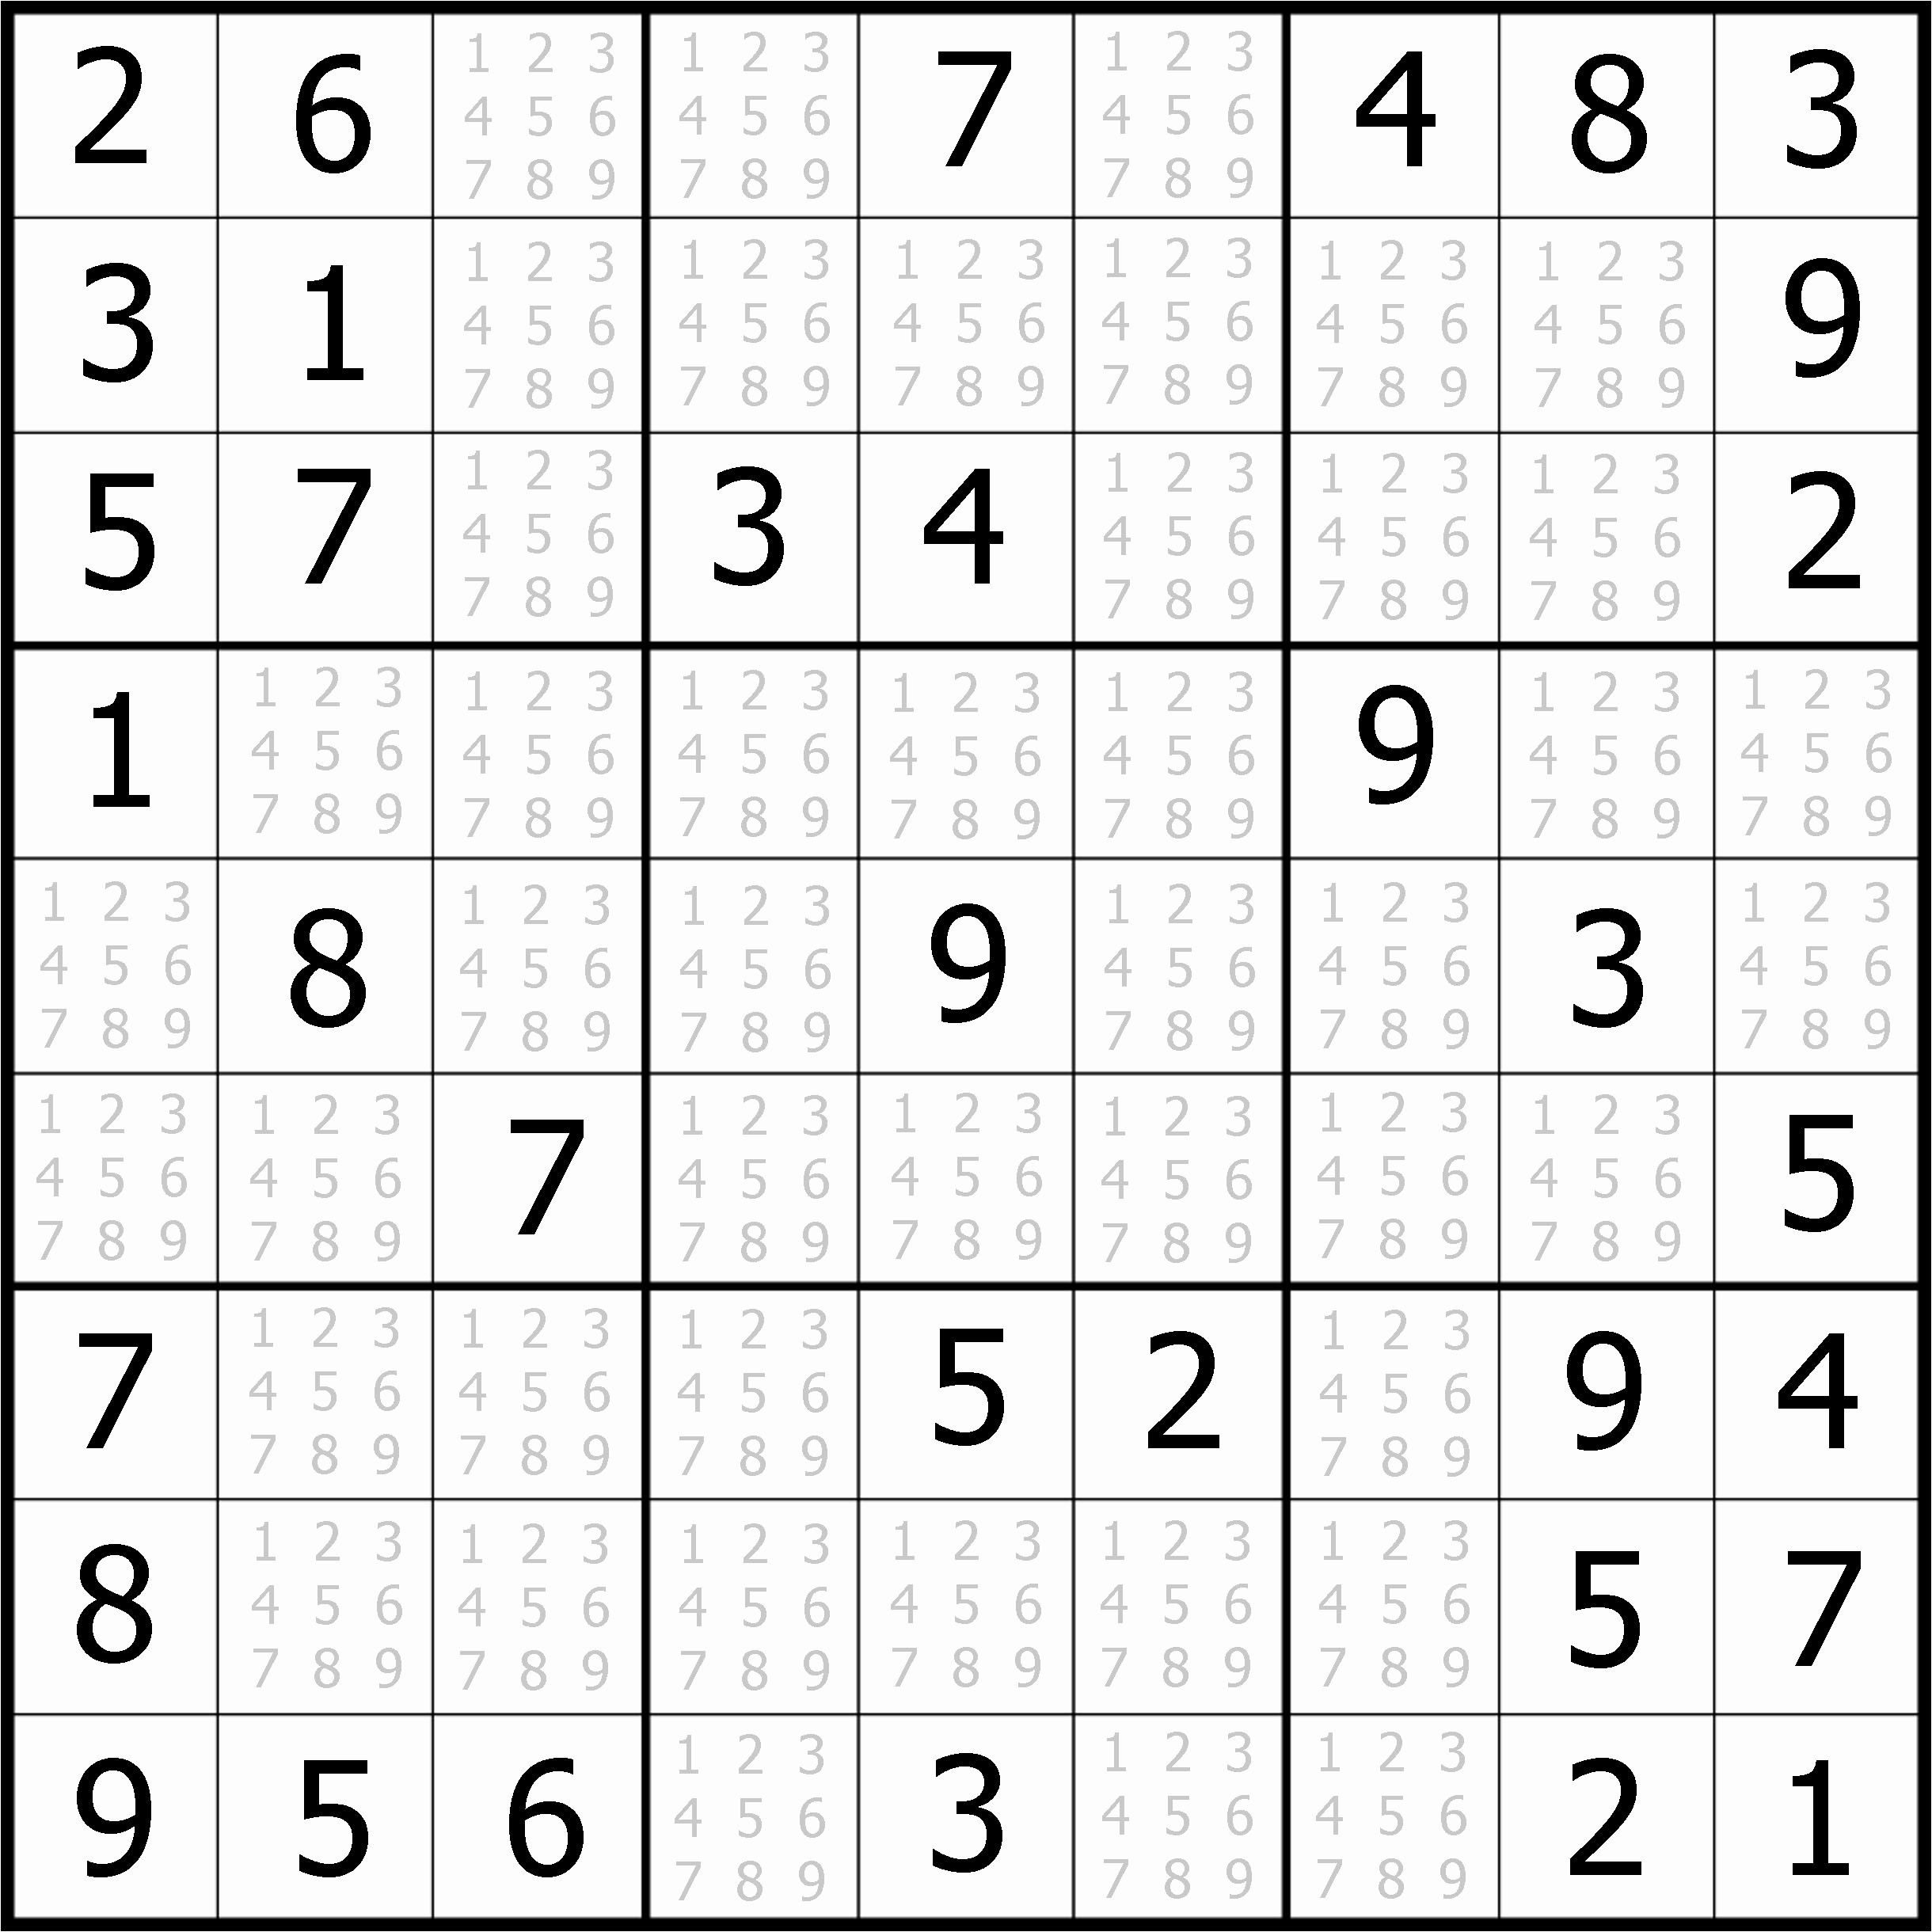 livewire-puzzles-free-printable-sudoku-puzzles-lyana-printable-sudoku